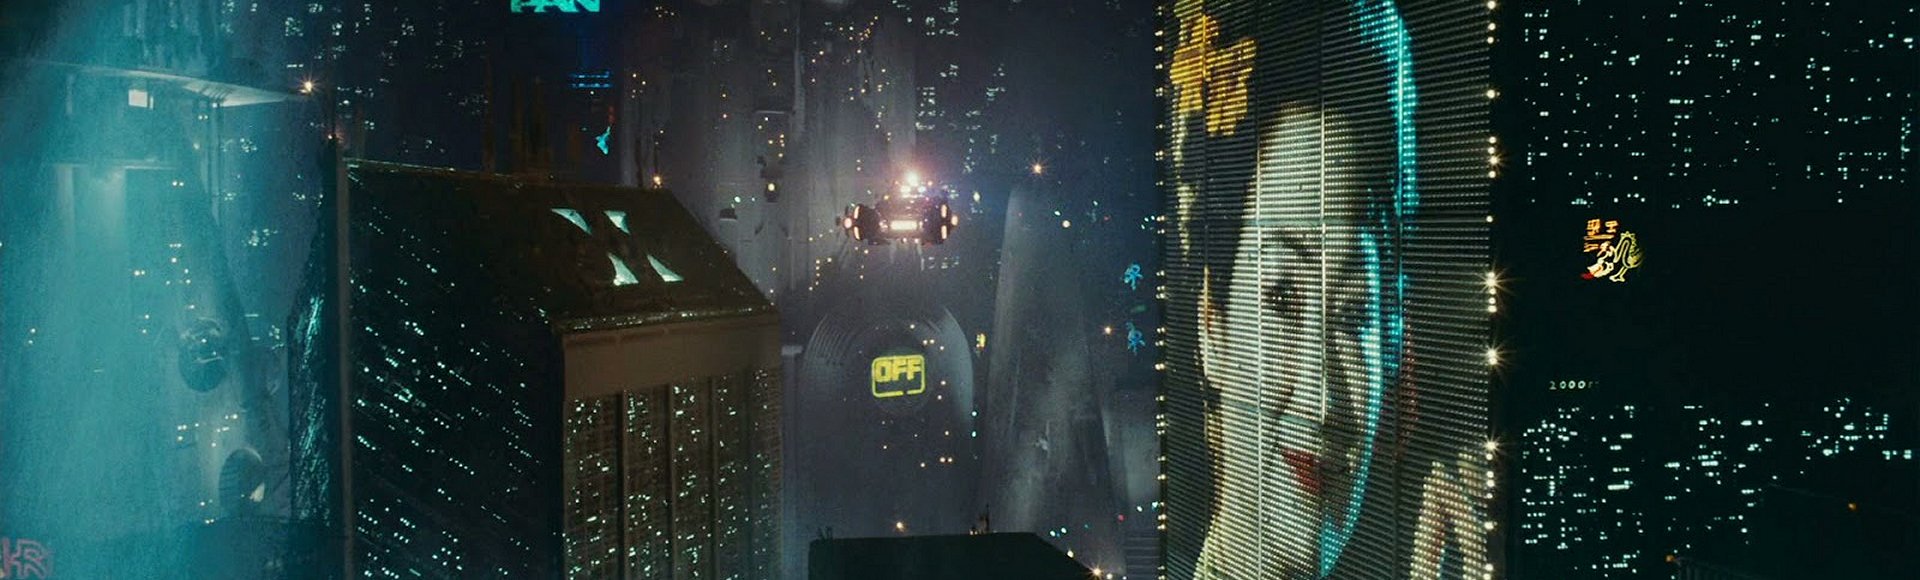 Dossier Blade Runner - il Film